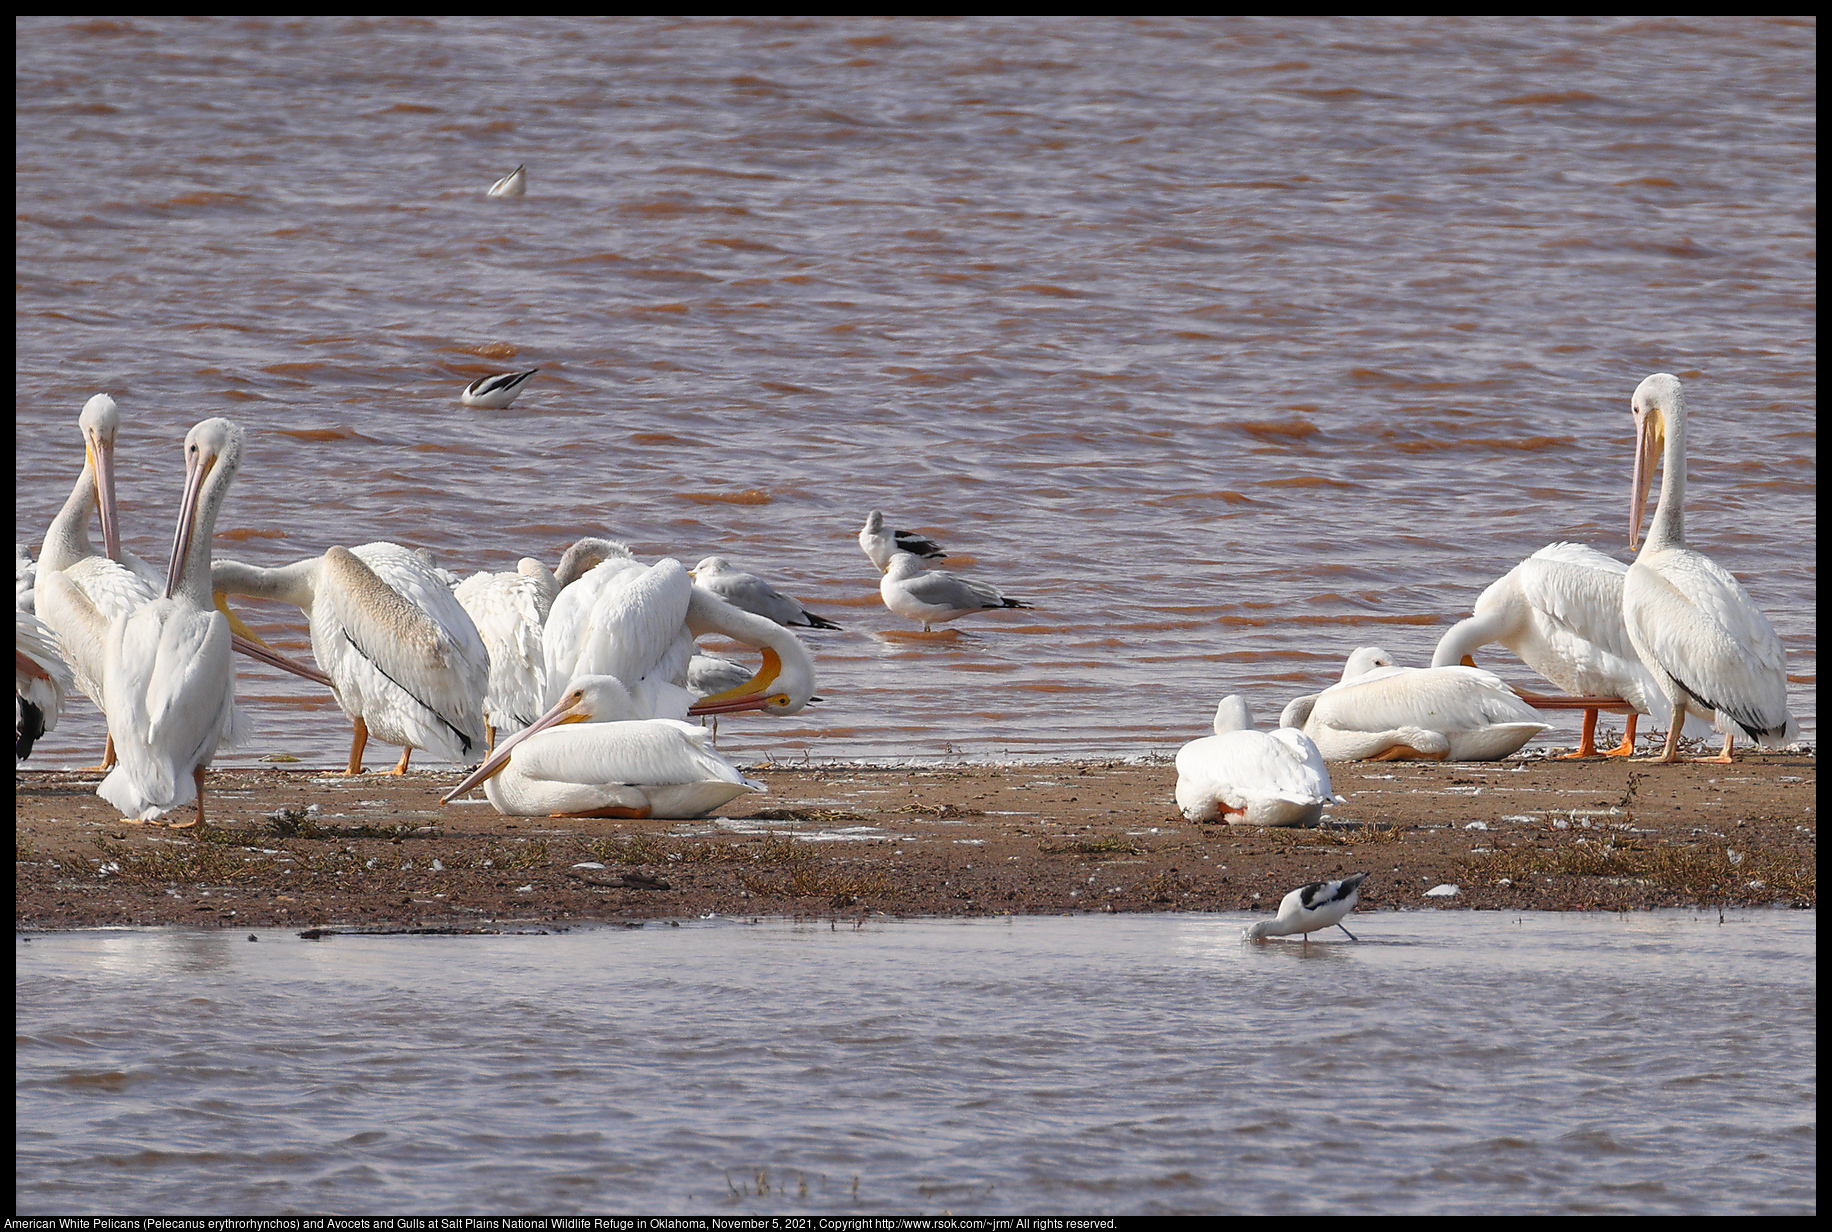 American White Pelicans (Pelecanus erythrorhynchos) and Avocets and Gulls at Salt Plains National Wildlife Refuge in Oklahoma, November 5, 2021